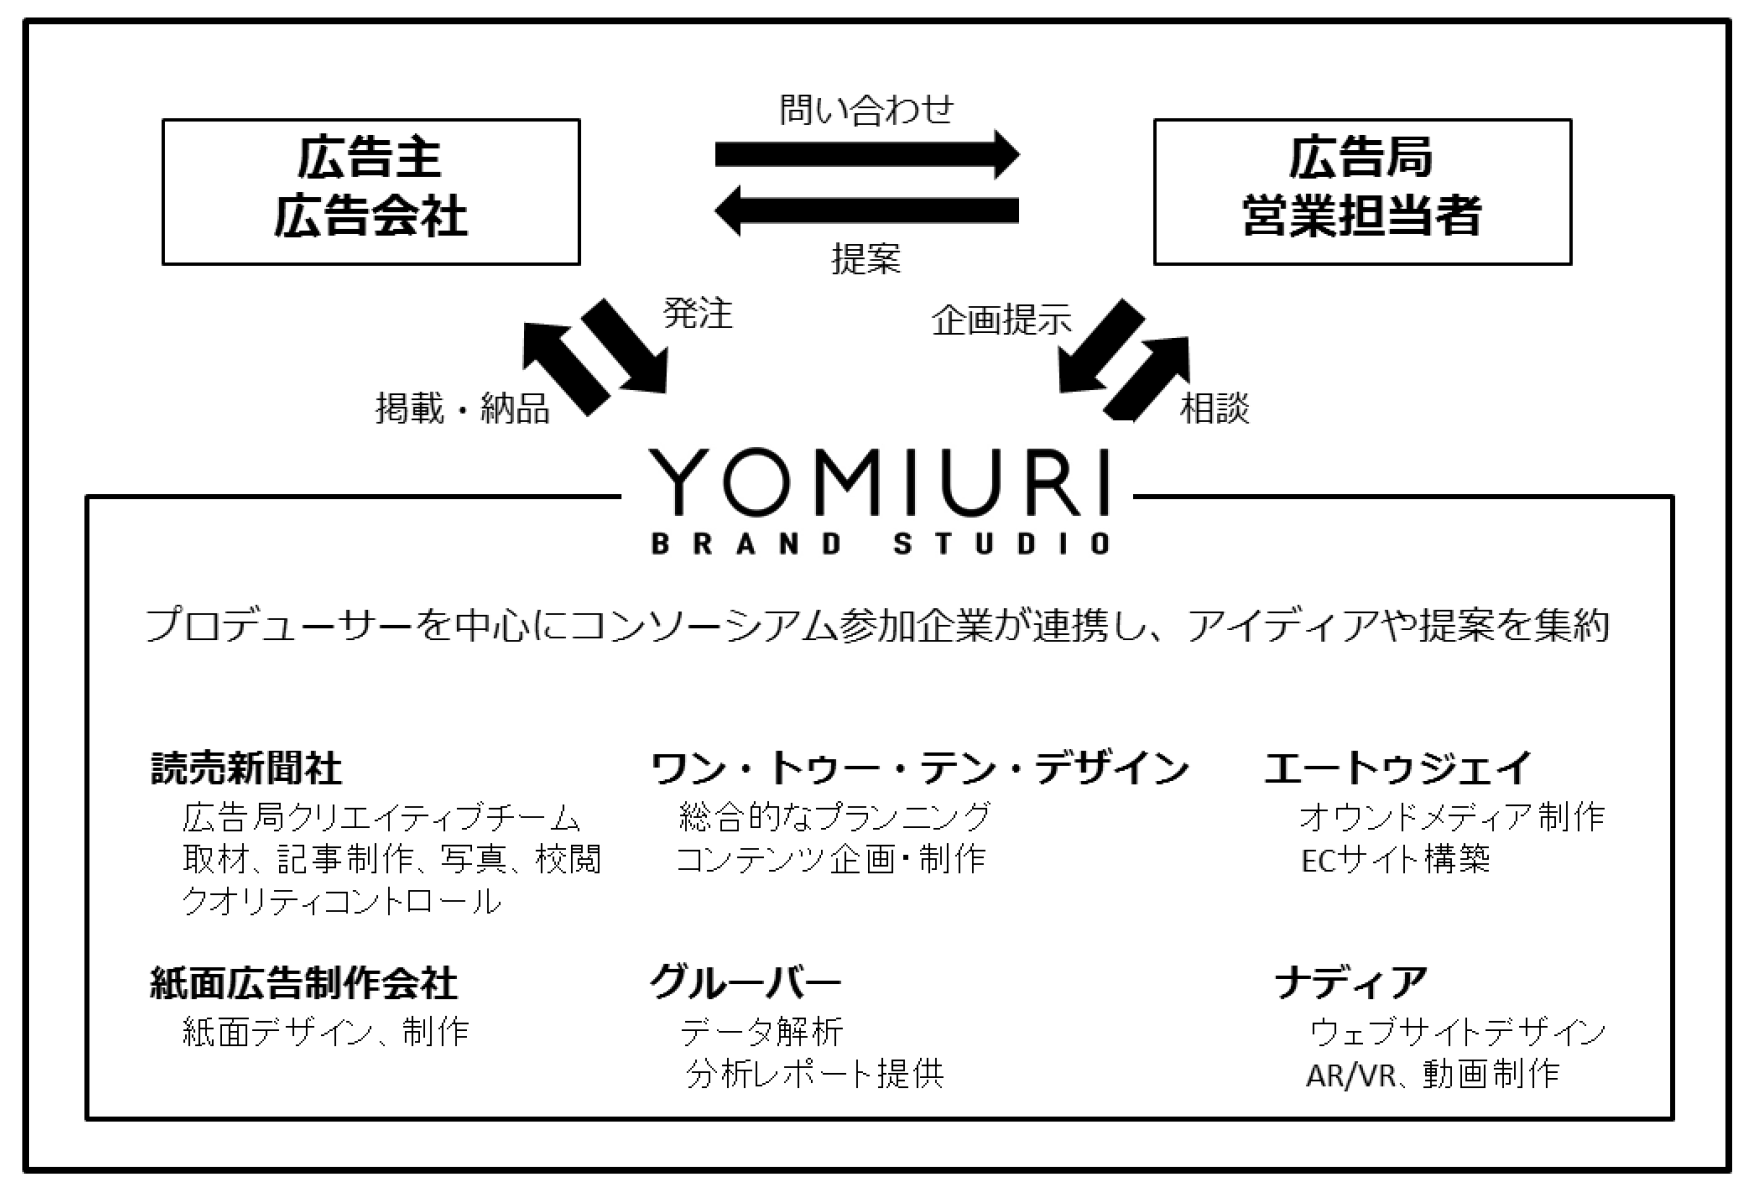 YOMIURI BRAND STUDIO イメージ図